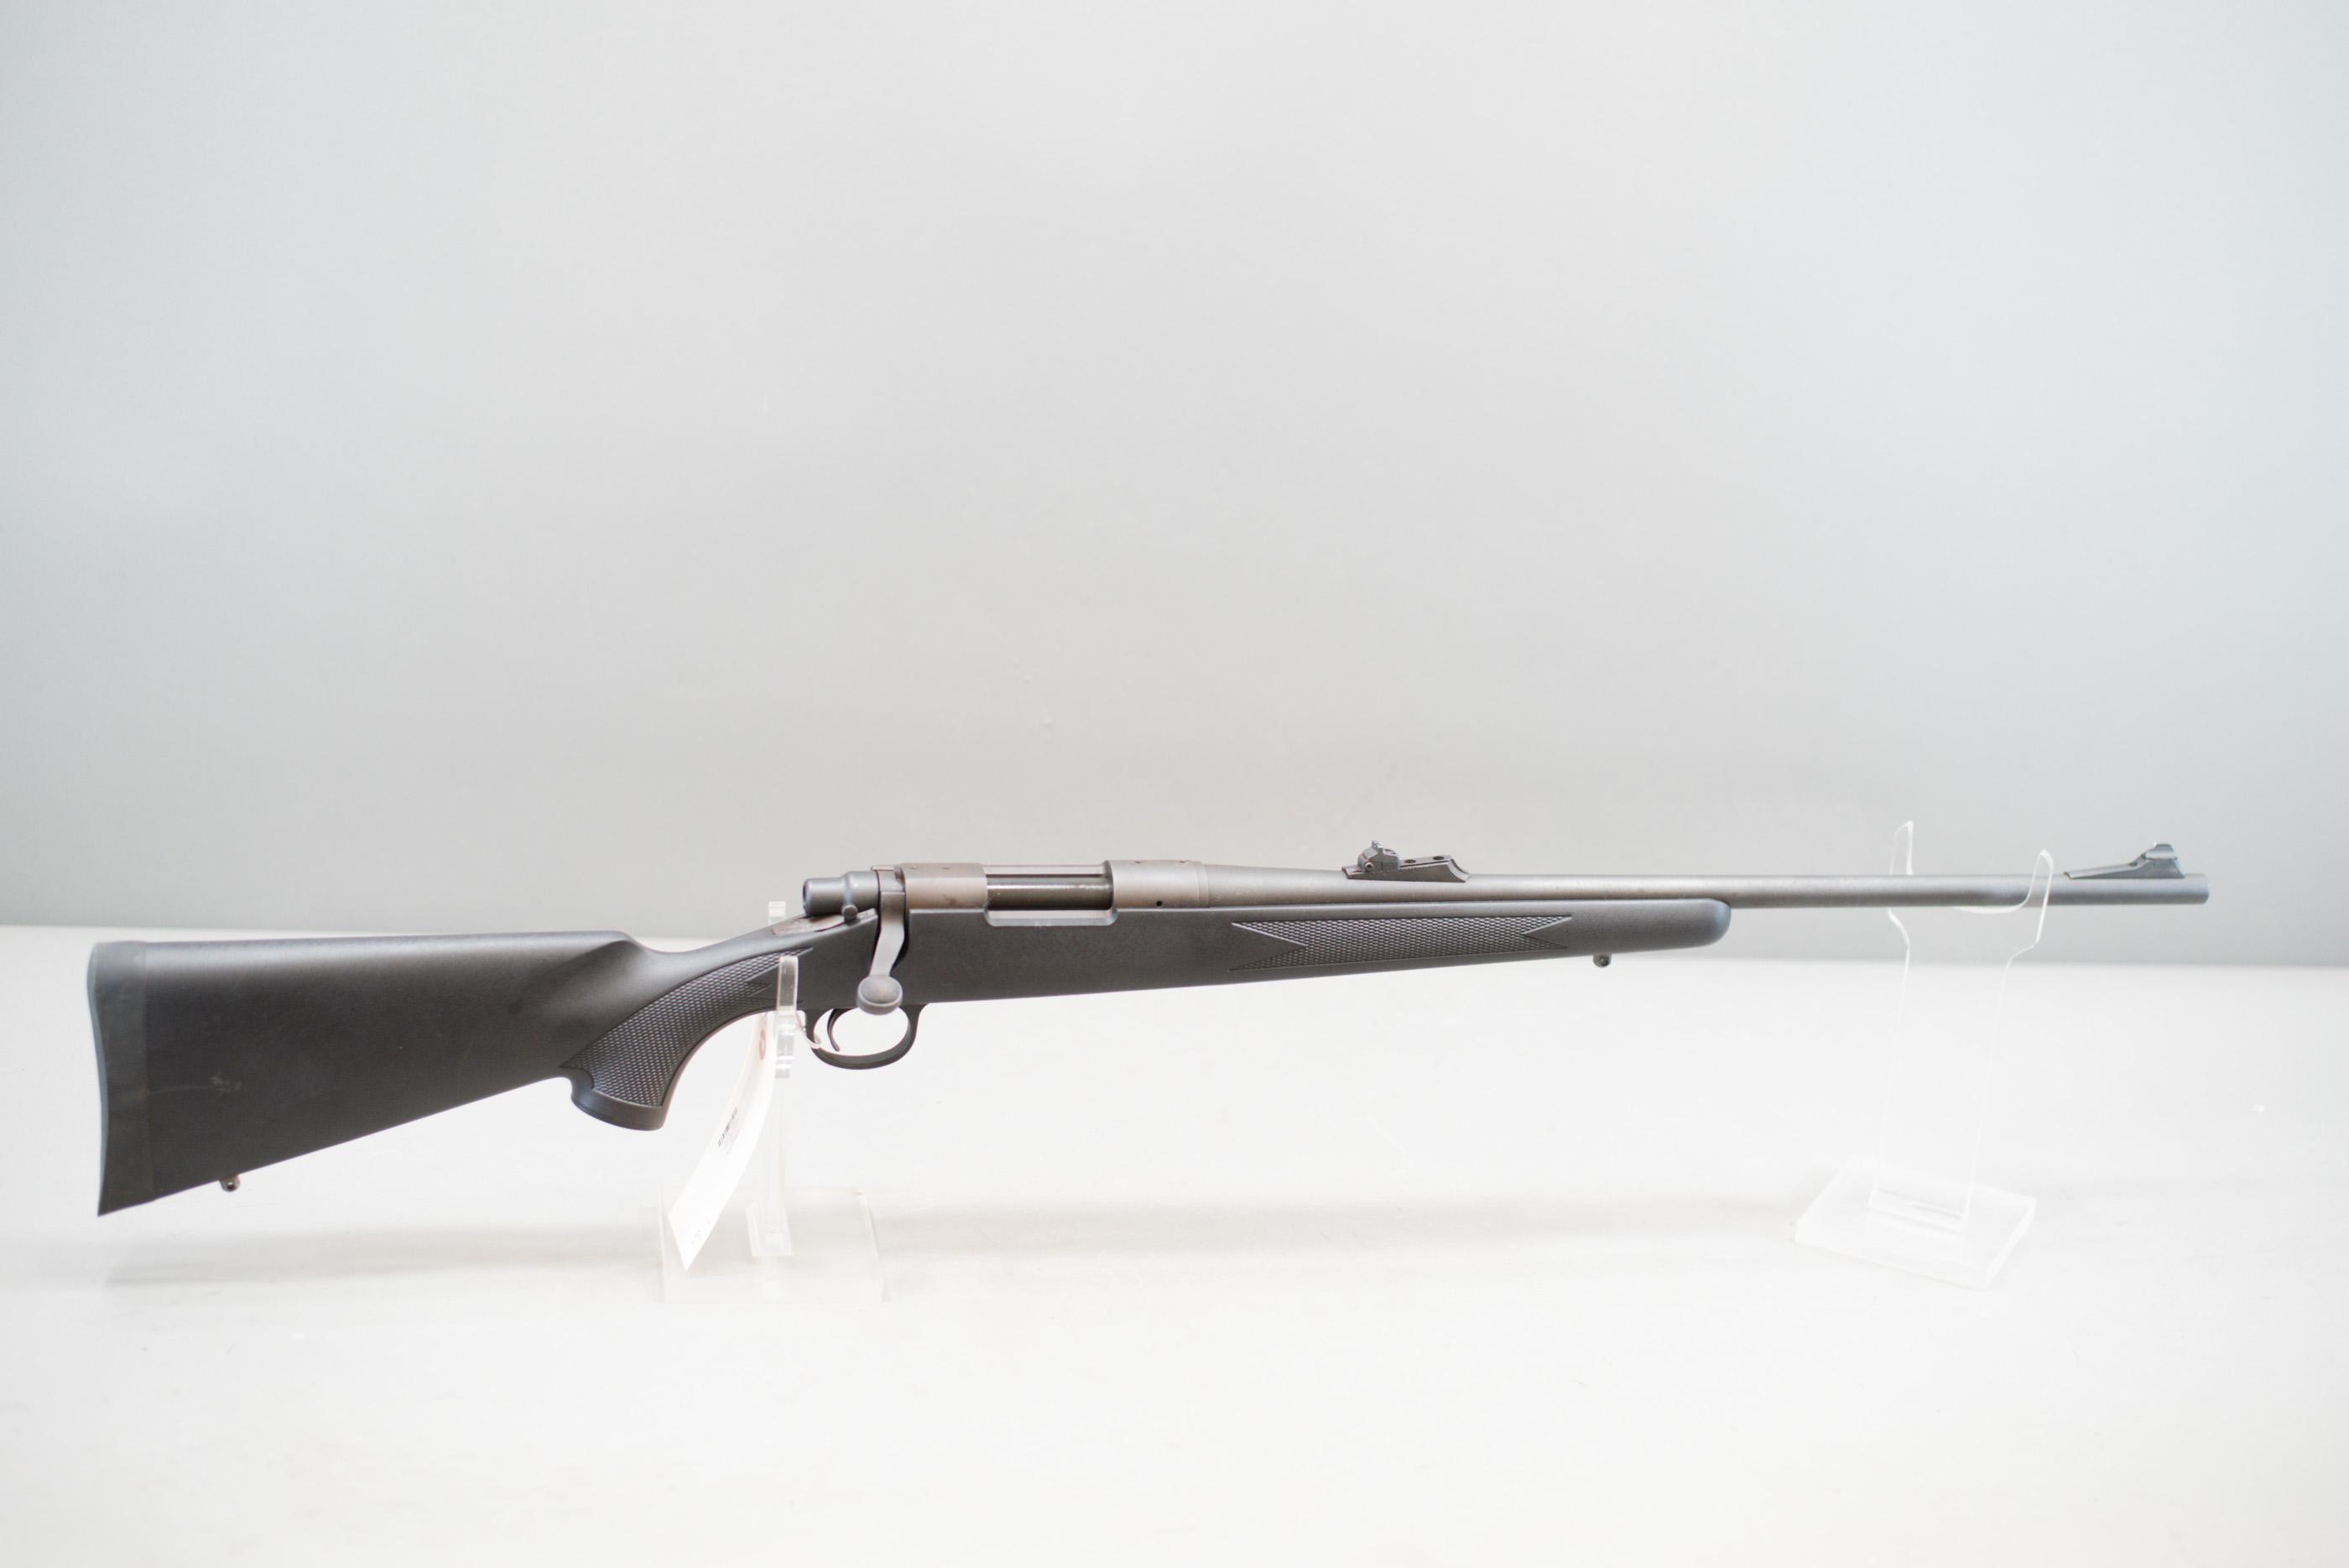 (R) Remington Model 700 .243 Win Rifle